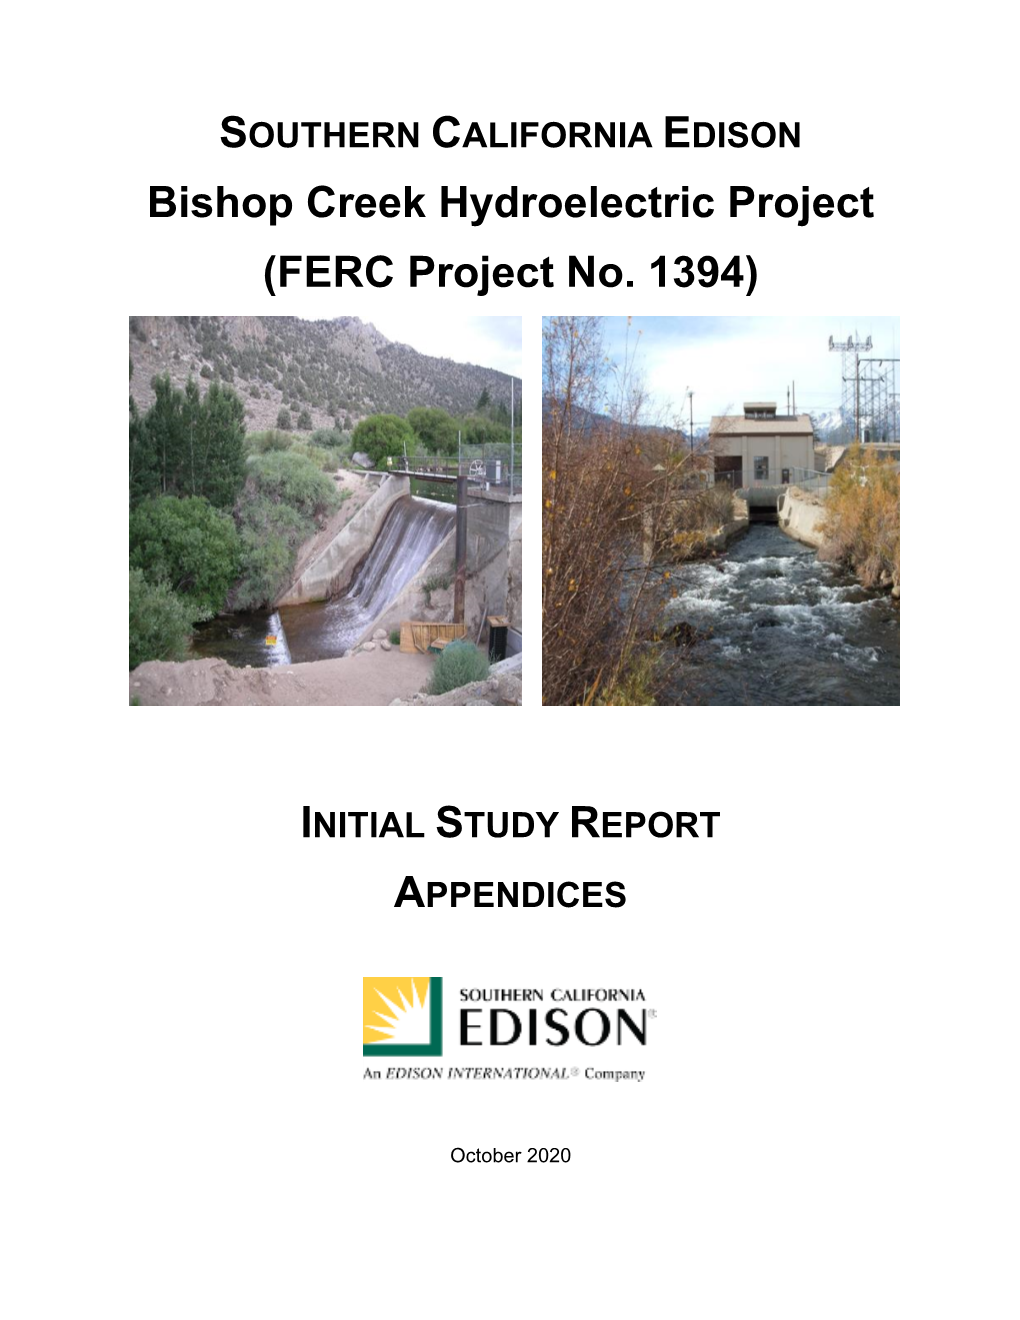 Bishop Creek Hydroelectric Project (FERC Project No